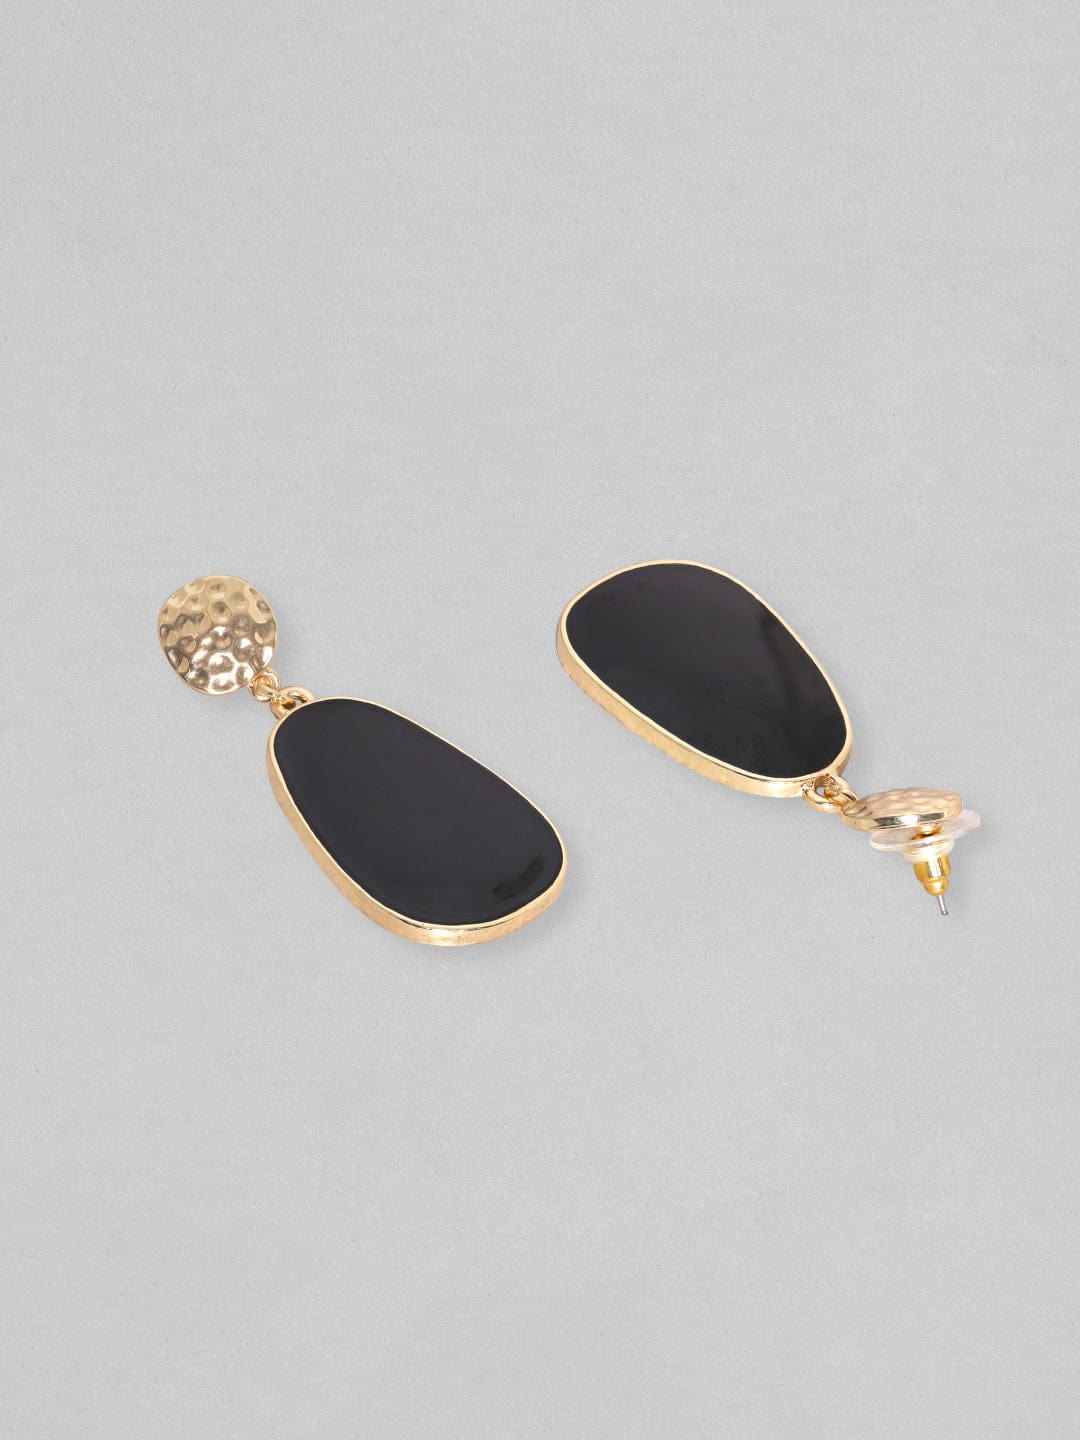 Rubans Voguish Gold Toned Texture With Black Drop Dangle Earrings Earrings